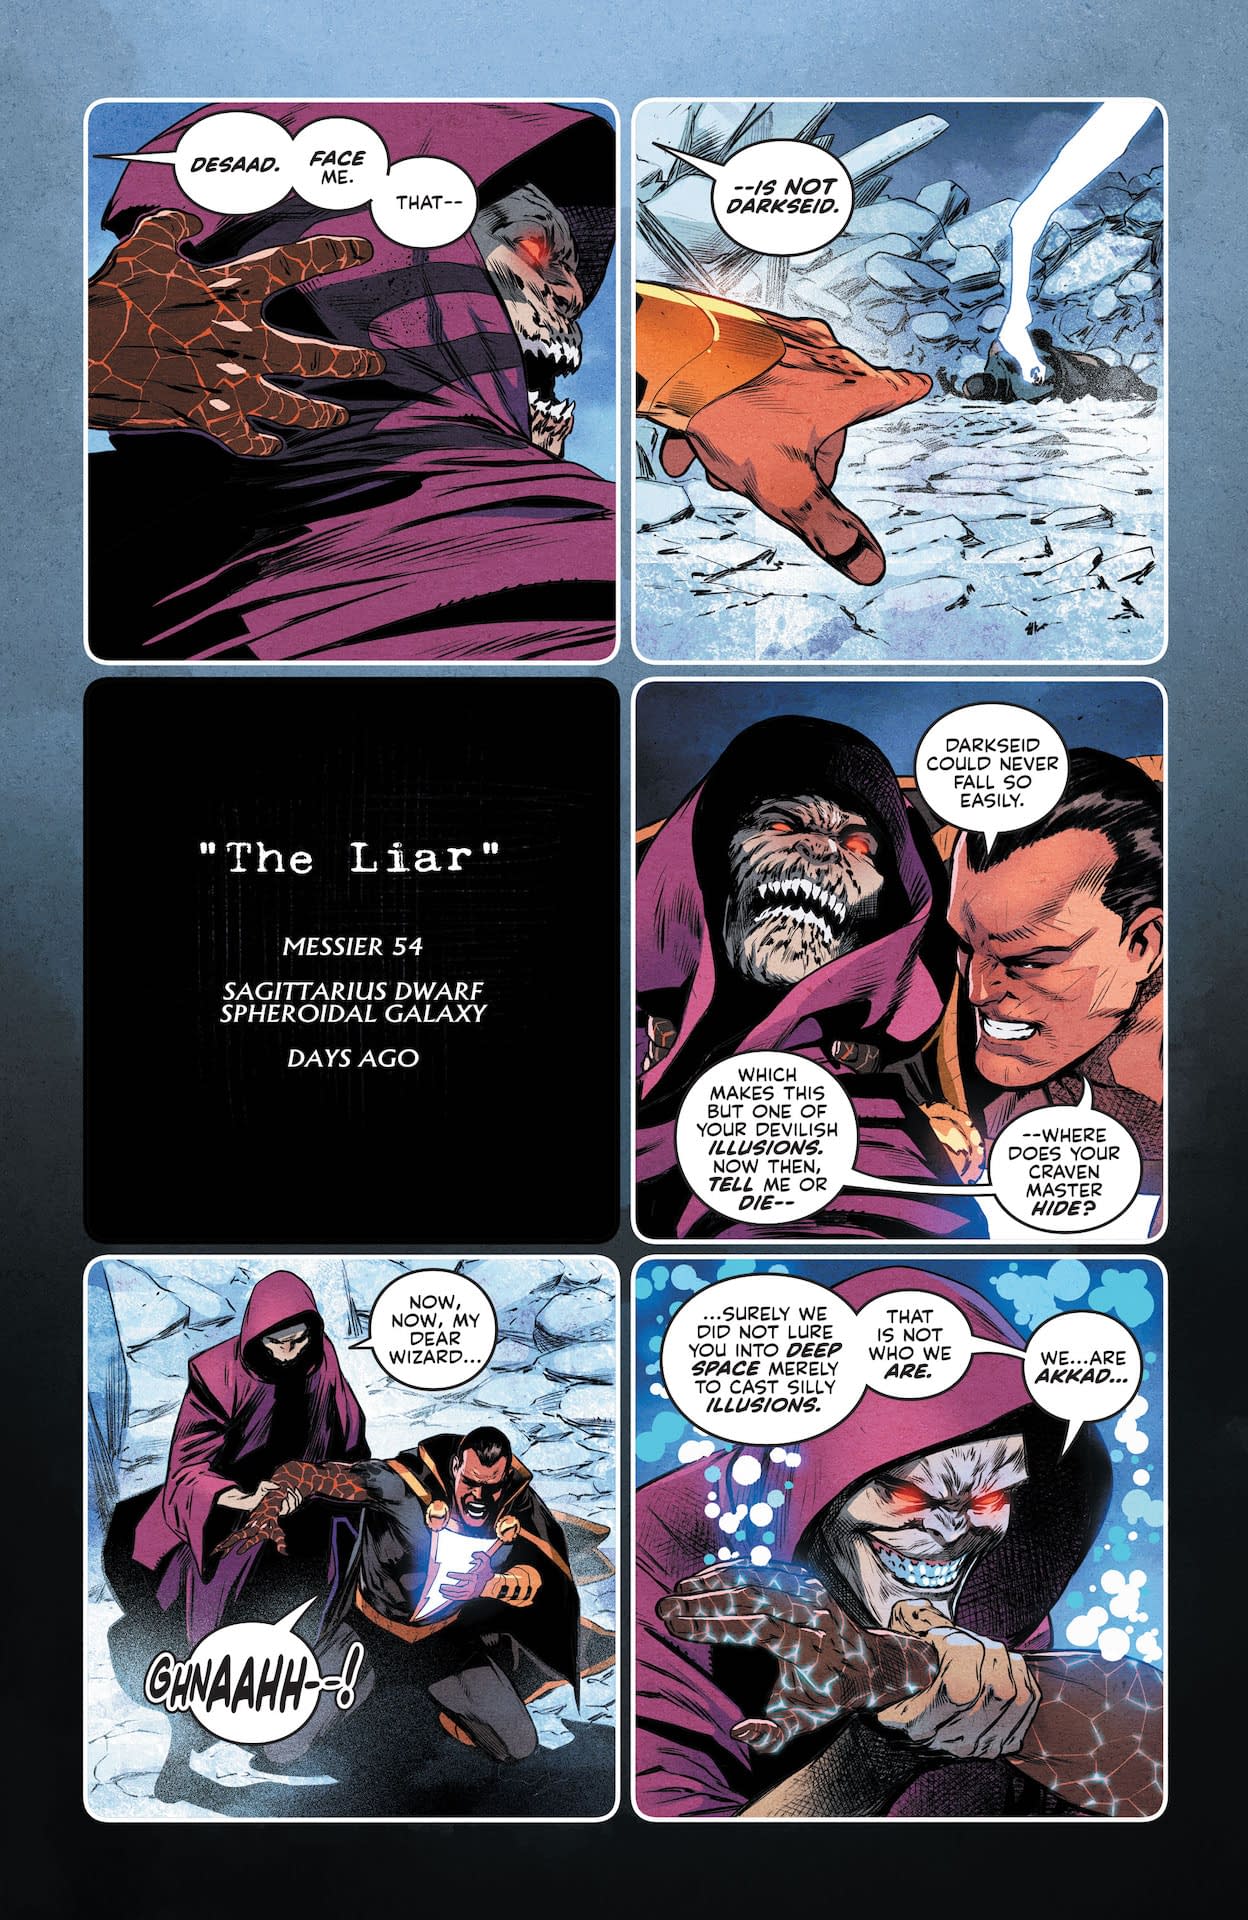 Black-Adam-3-9 - DC Comics News